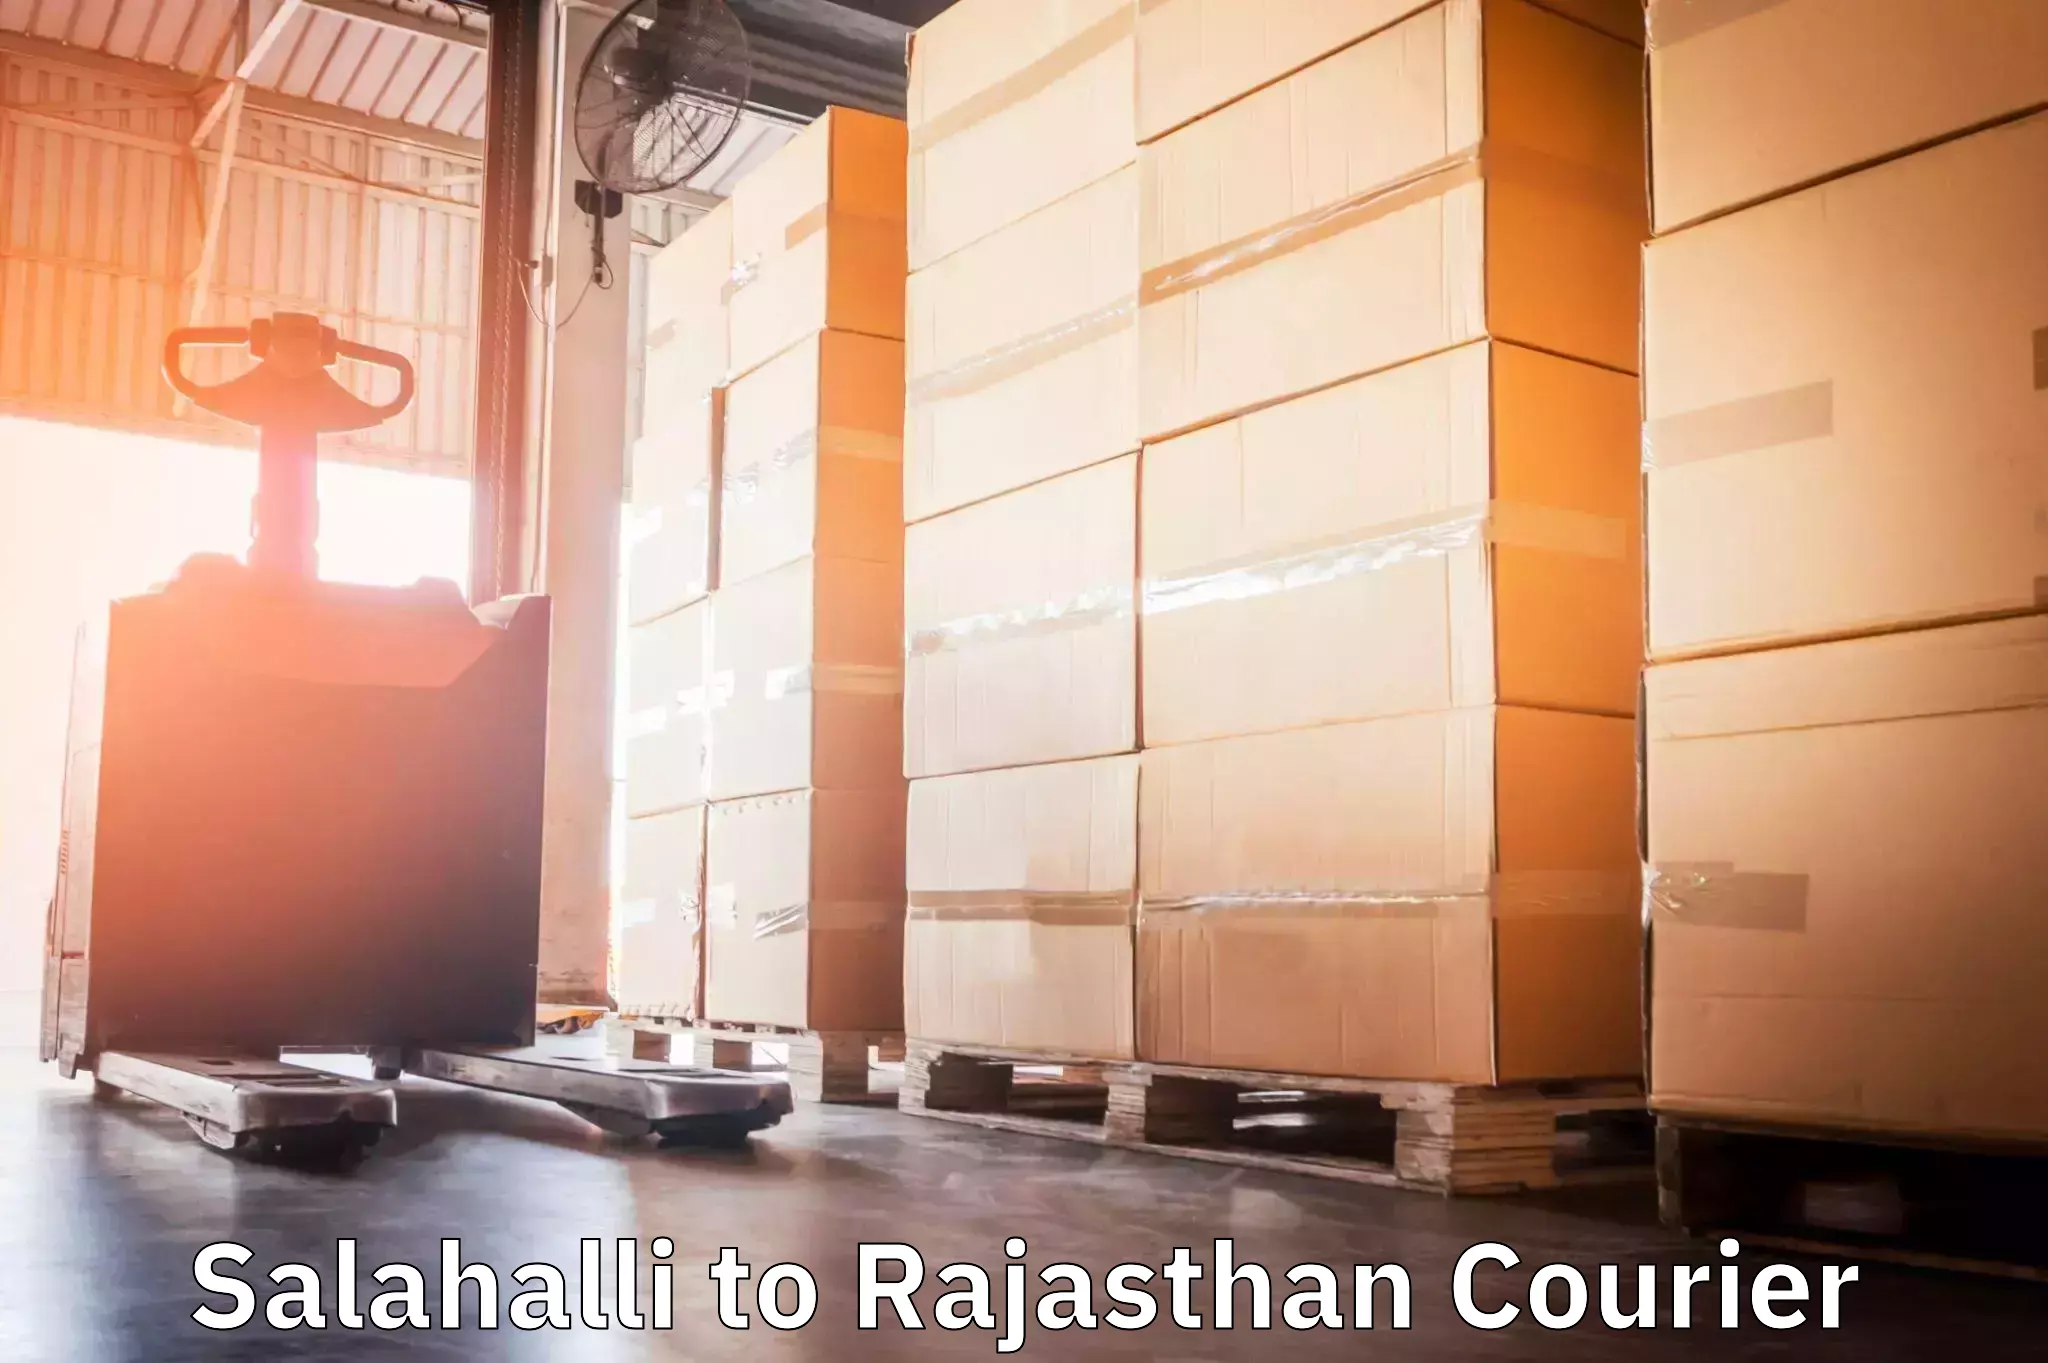 Seamless shipping experience Salahalli to Rajgarh Rajasthan